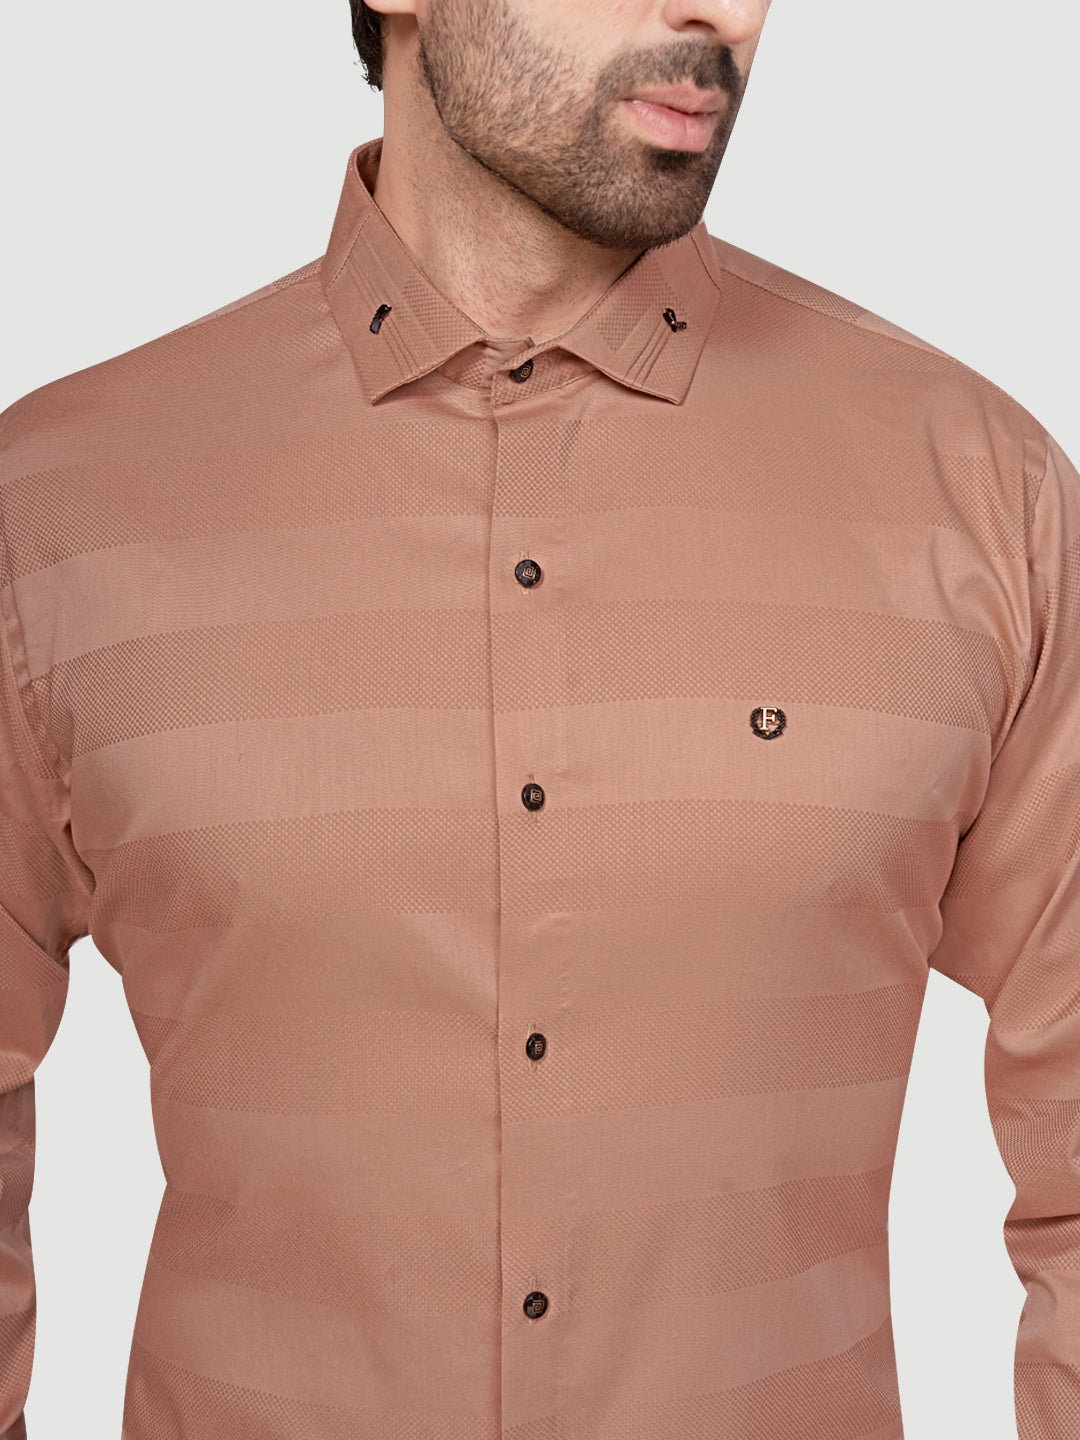 Black and White Men's Designer Shirt with Collar Accessory & Designer Broach Orange